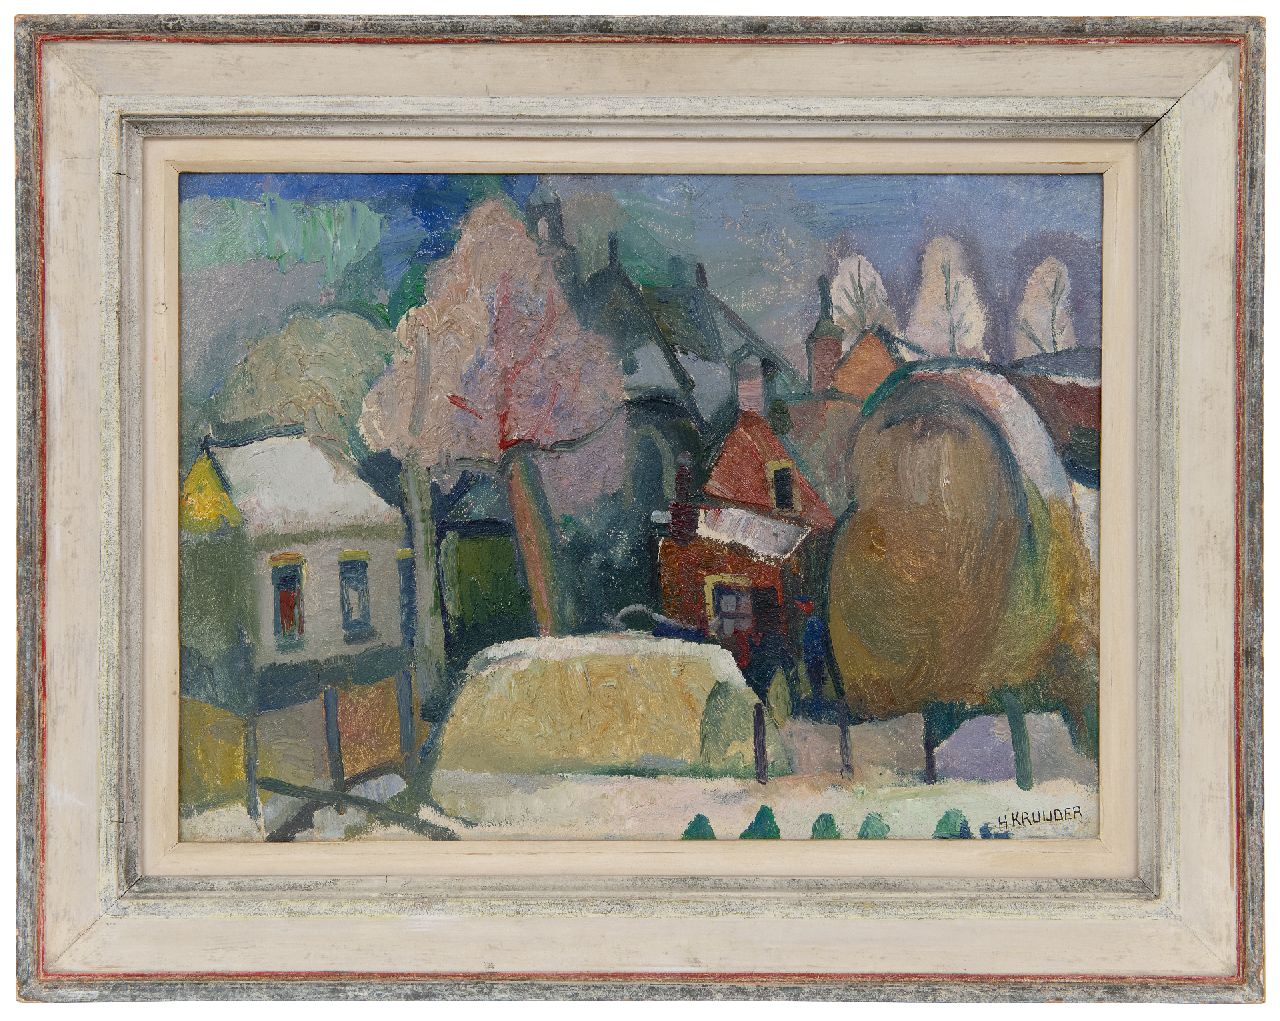 Kruyder H.J.  | 'Herman' Justus Kruyder | Paintings offered for sale | Nursery School, Heemstede, oil on board 32.0 x 43.7 cm, signed l.r. and painted circa 1919-1923